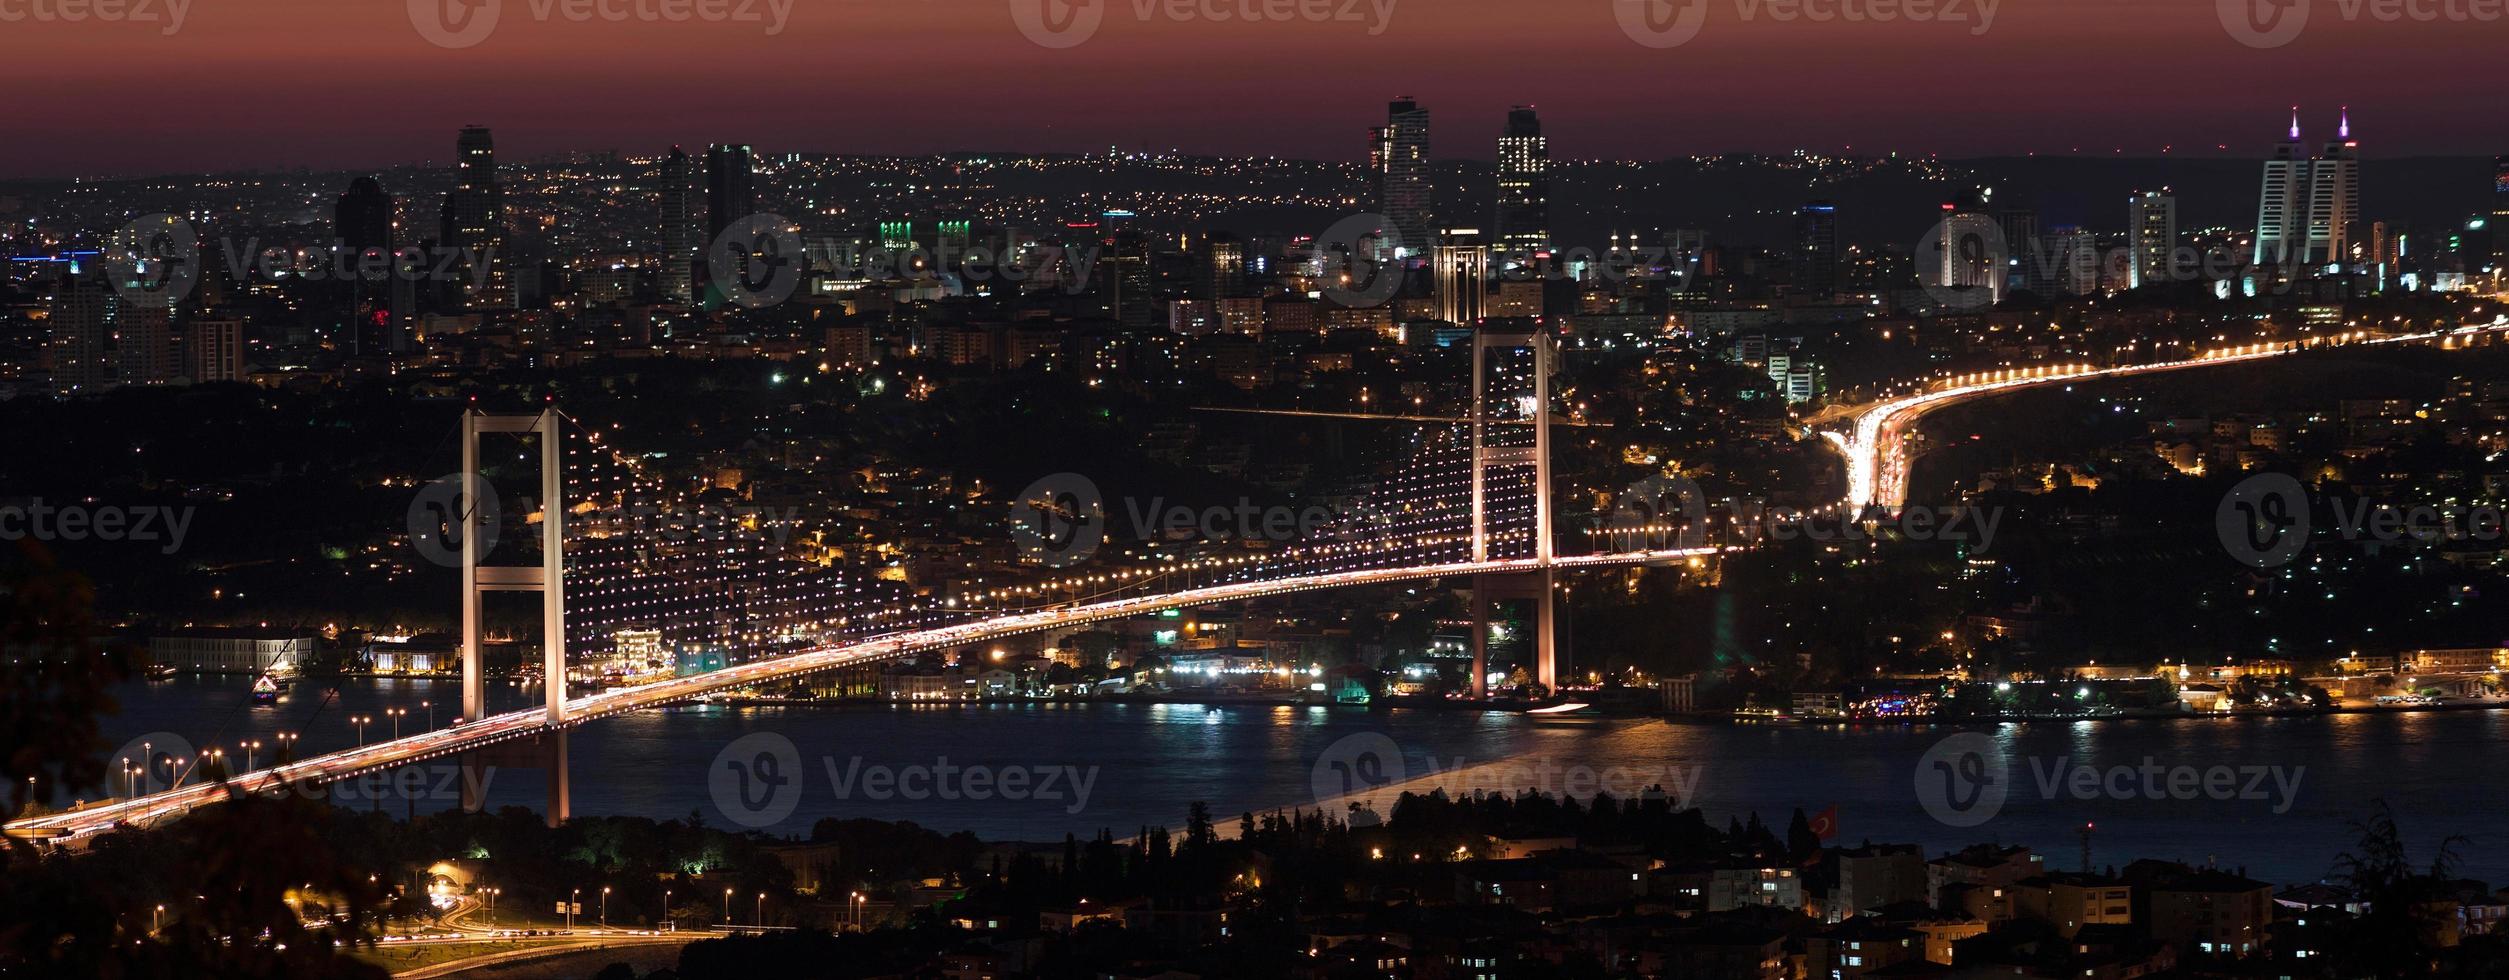 Bosphorus bridge at night photo